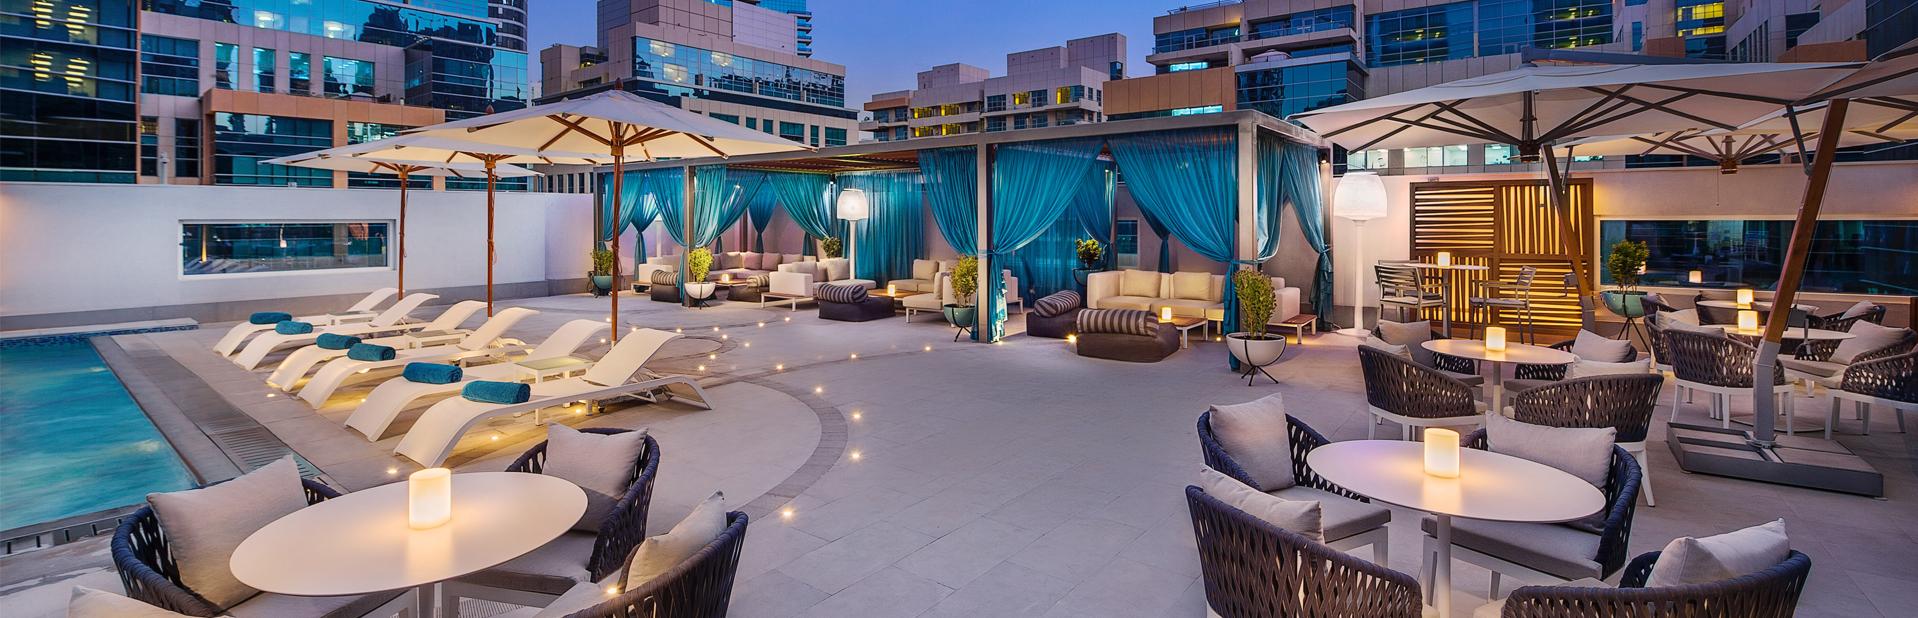 Отель DoubleTree by Hilton Hotel - Jumeirah Beach в Дубай, ОАЭ